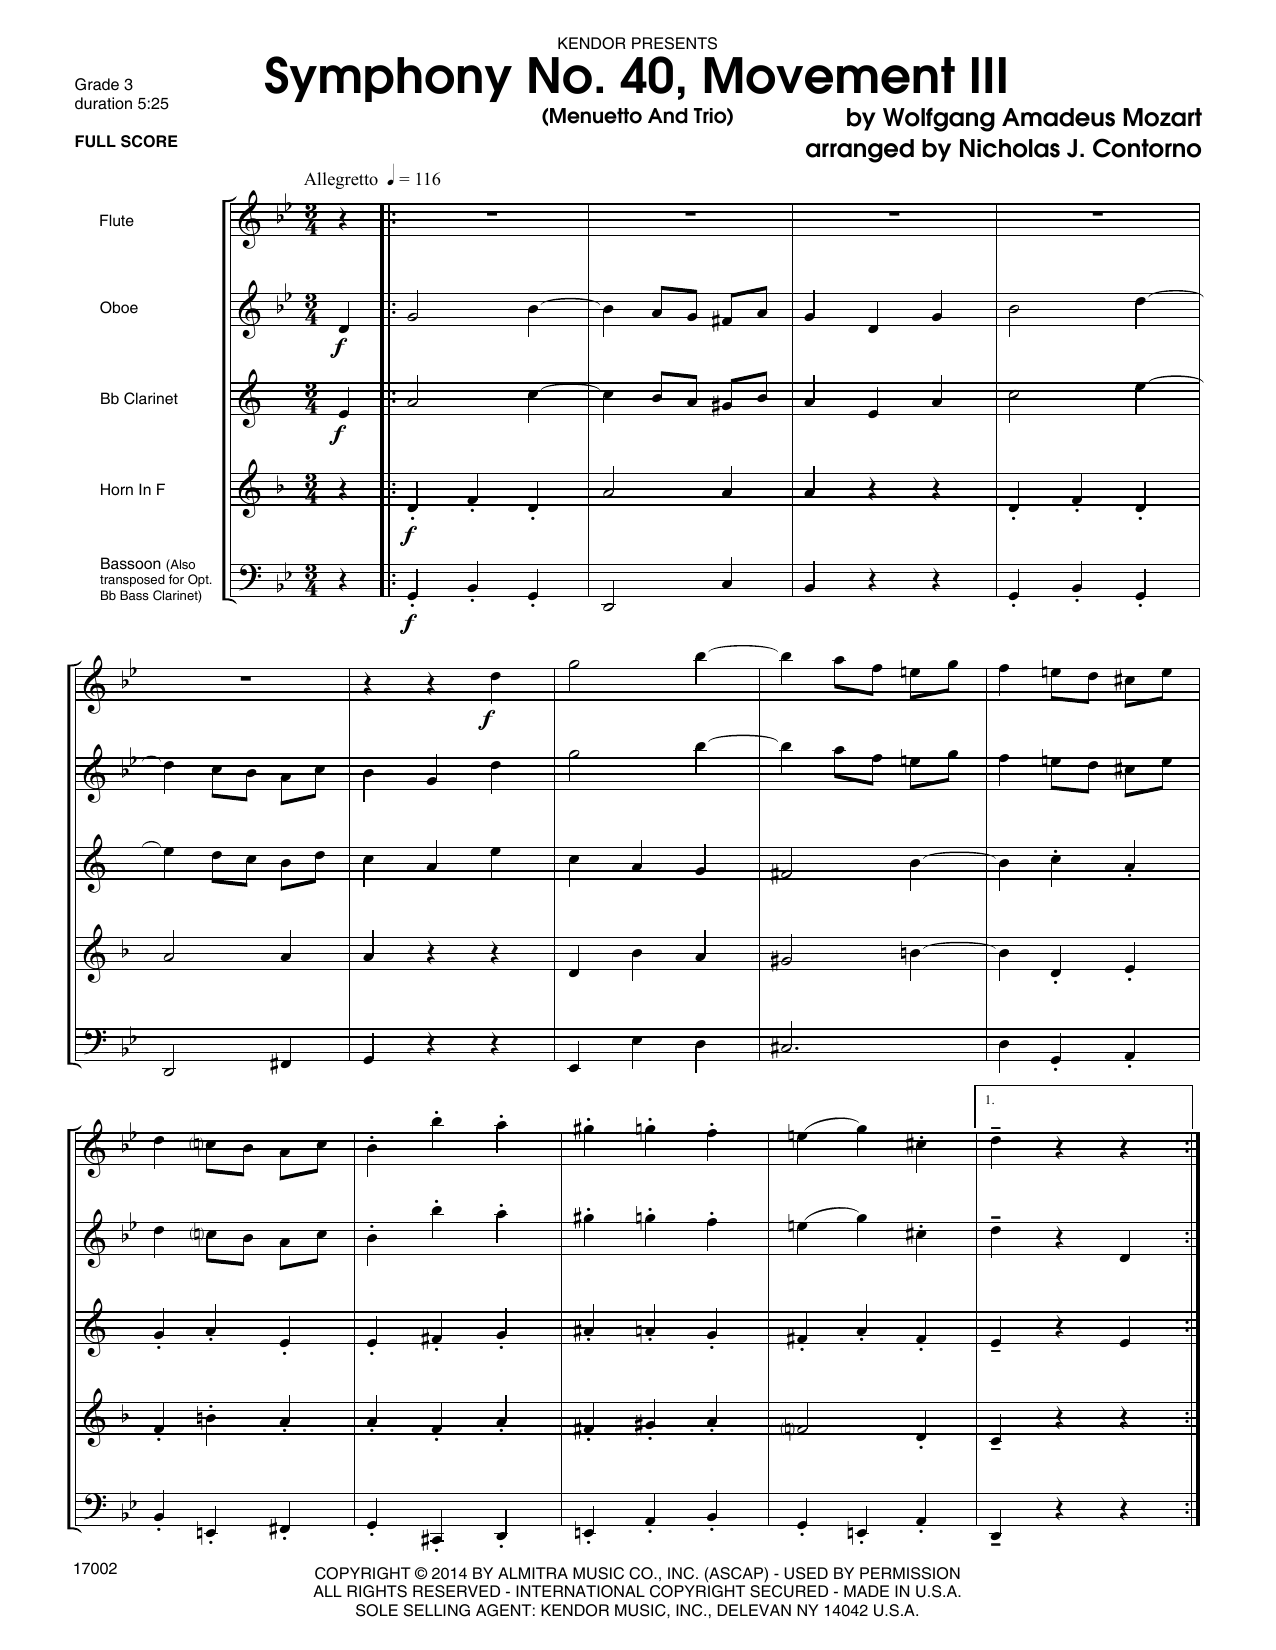 Download Nicholas Contorno Symphony No. 40, Movement III (Menuetto Sheet Music